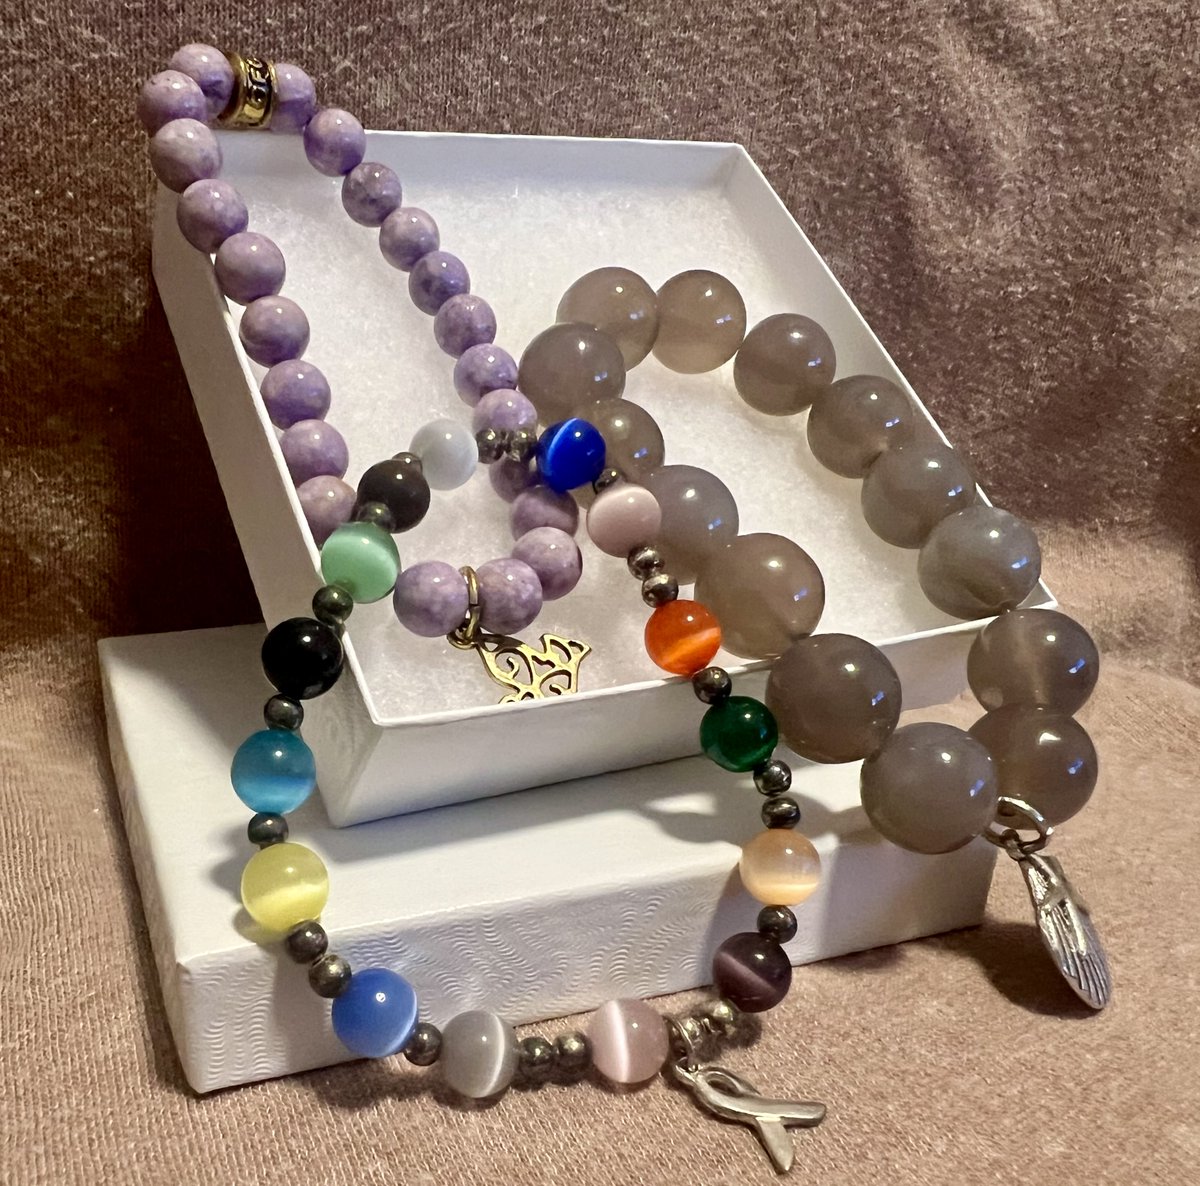 COOL #Gemstone Agate #TigersEye Glass Bead 7' #Bracelet ~ #JewelryLOT OF 3 NWOT FREE SHIP

#giftsforher #giftsformom #mothersdaygifts #jewelry #bracelets #gemstones #agates #polishedstones #beadbracelets #giftideas #gifts #ebayfinds 

 ebay.com/itm/2667624157… #eBay via @eBay